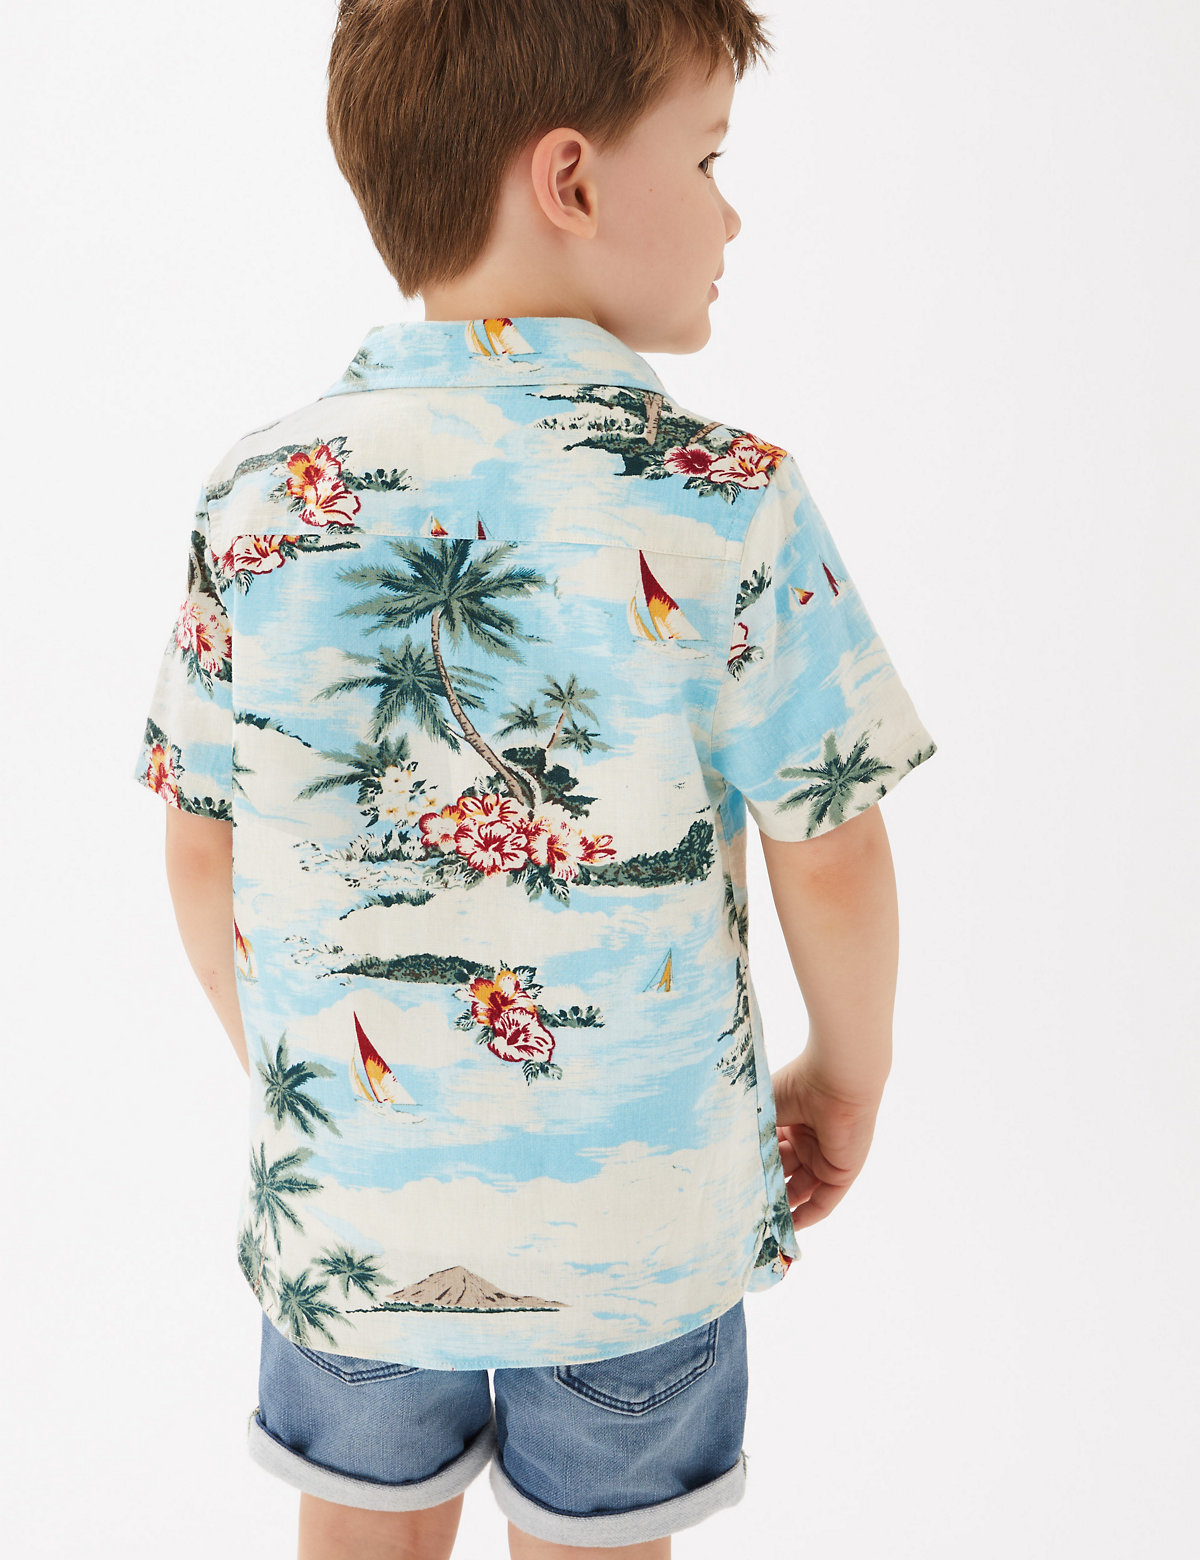 Linen Rich Tropical Print Shirt (2-7 Yrs)